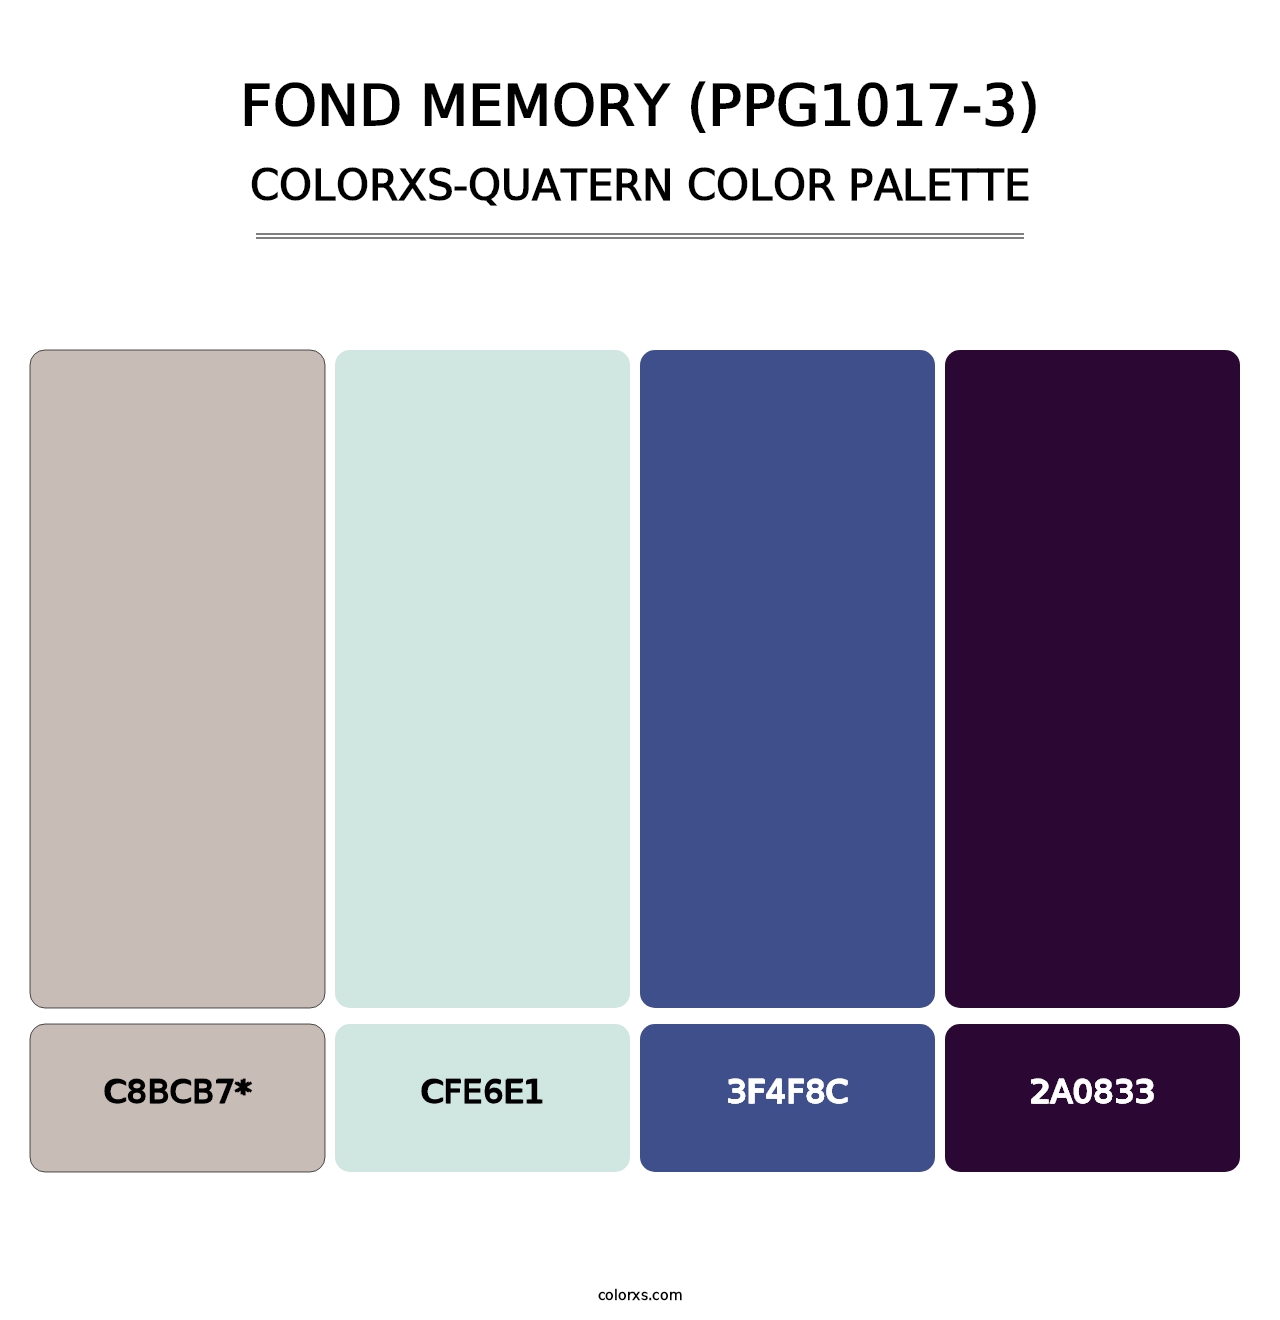 Fond Memory (PPG1017-3) - Colorxs Quatern Palette